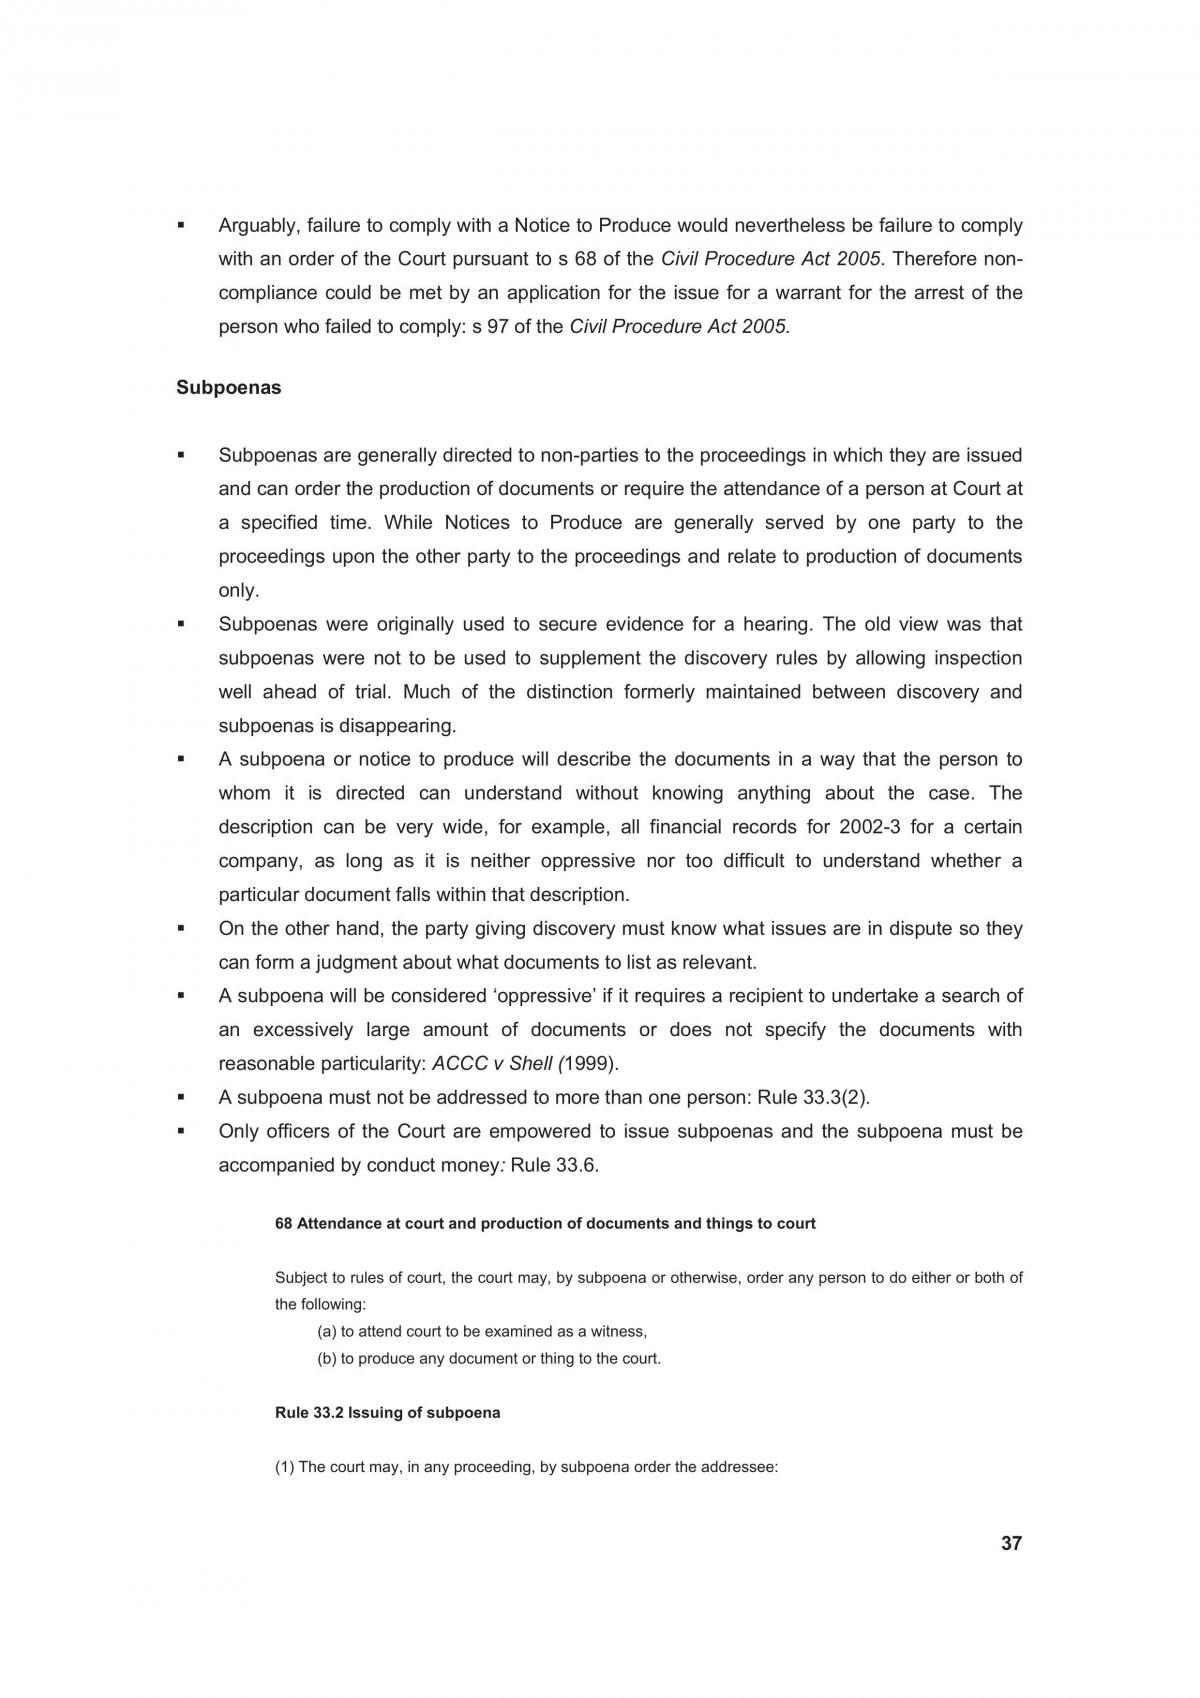 Dispute Resolution & Civil Procedure - Page 37